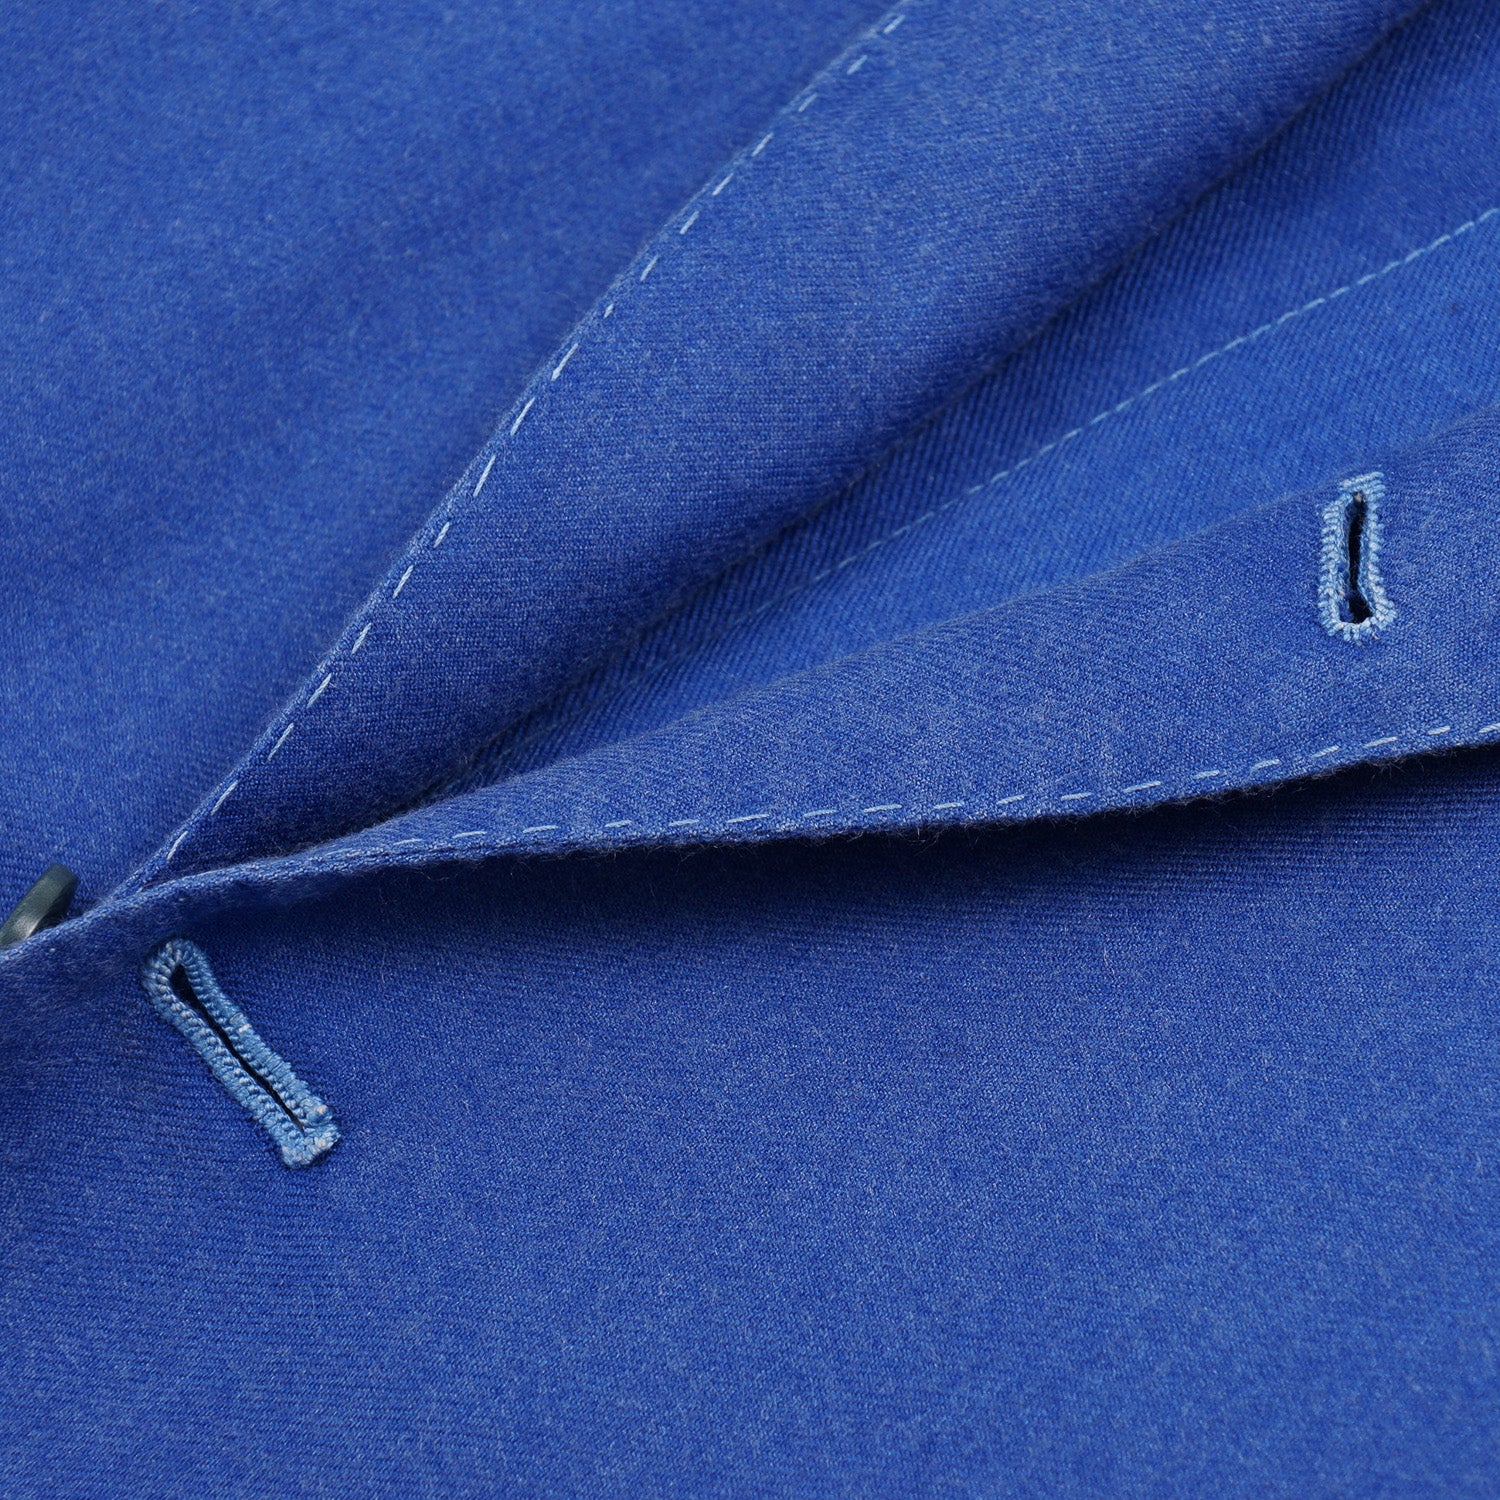 Kiton Soft-Constructed Cashmere Sport Coat - Top Shelf Apparel